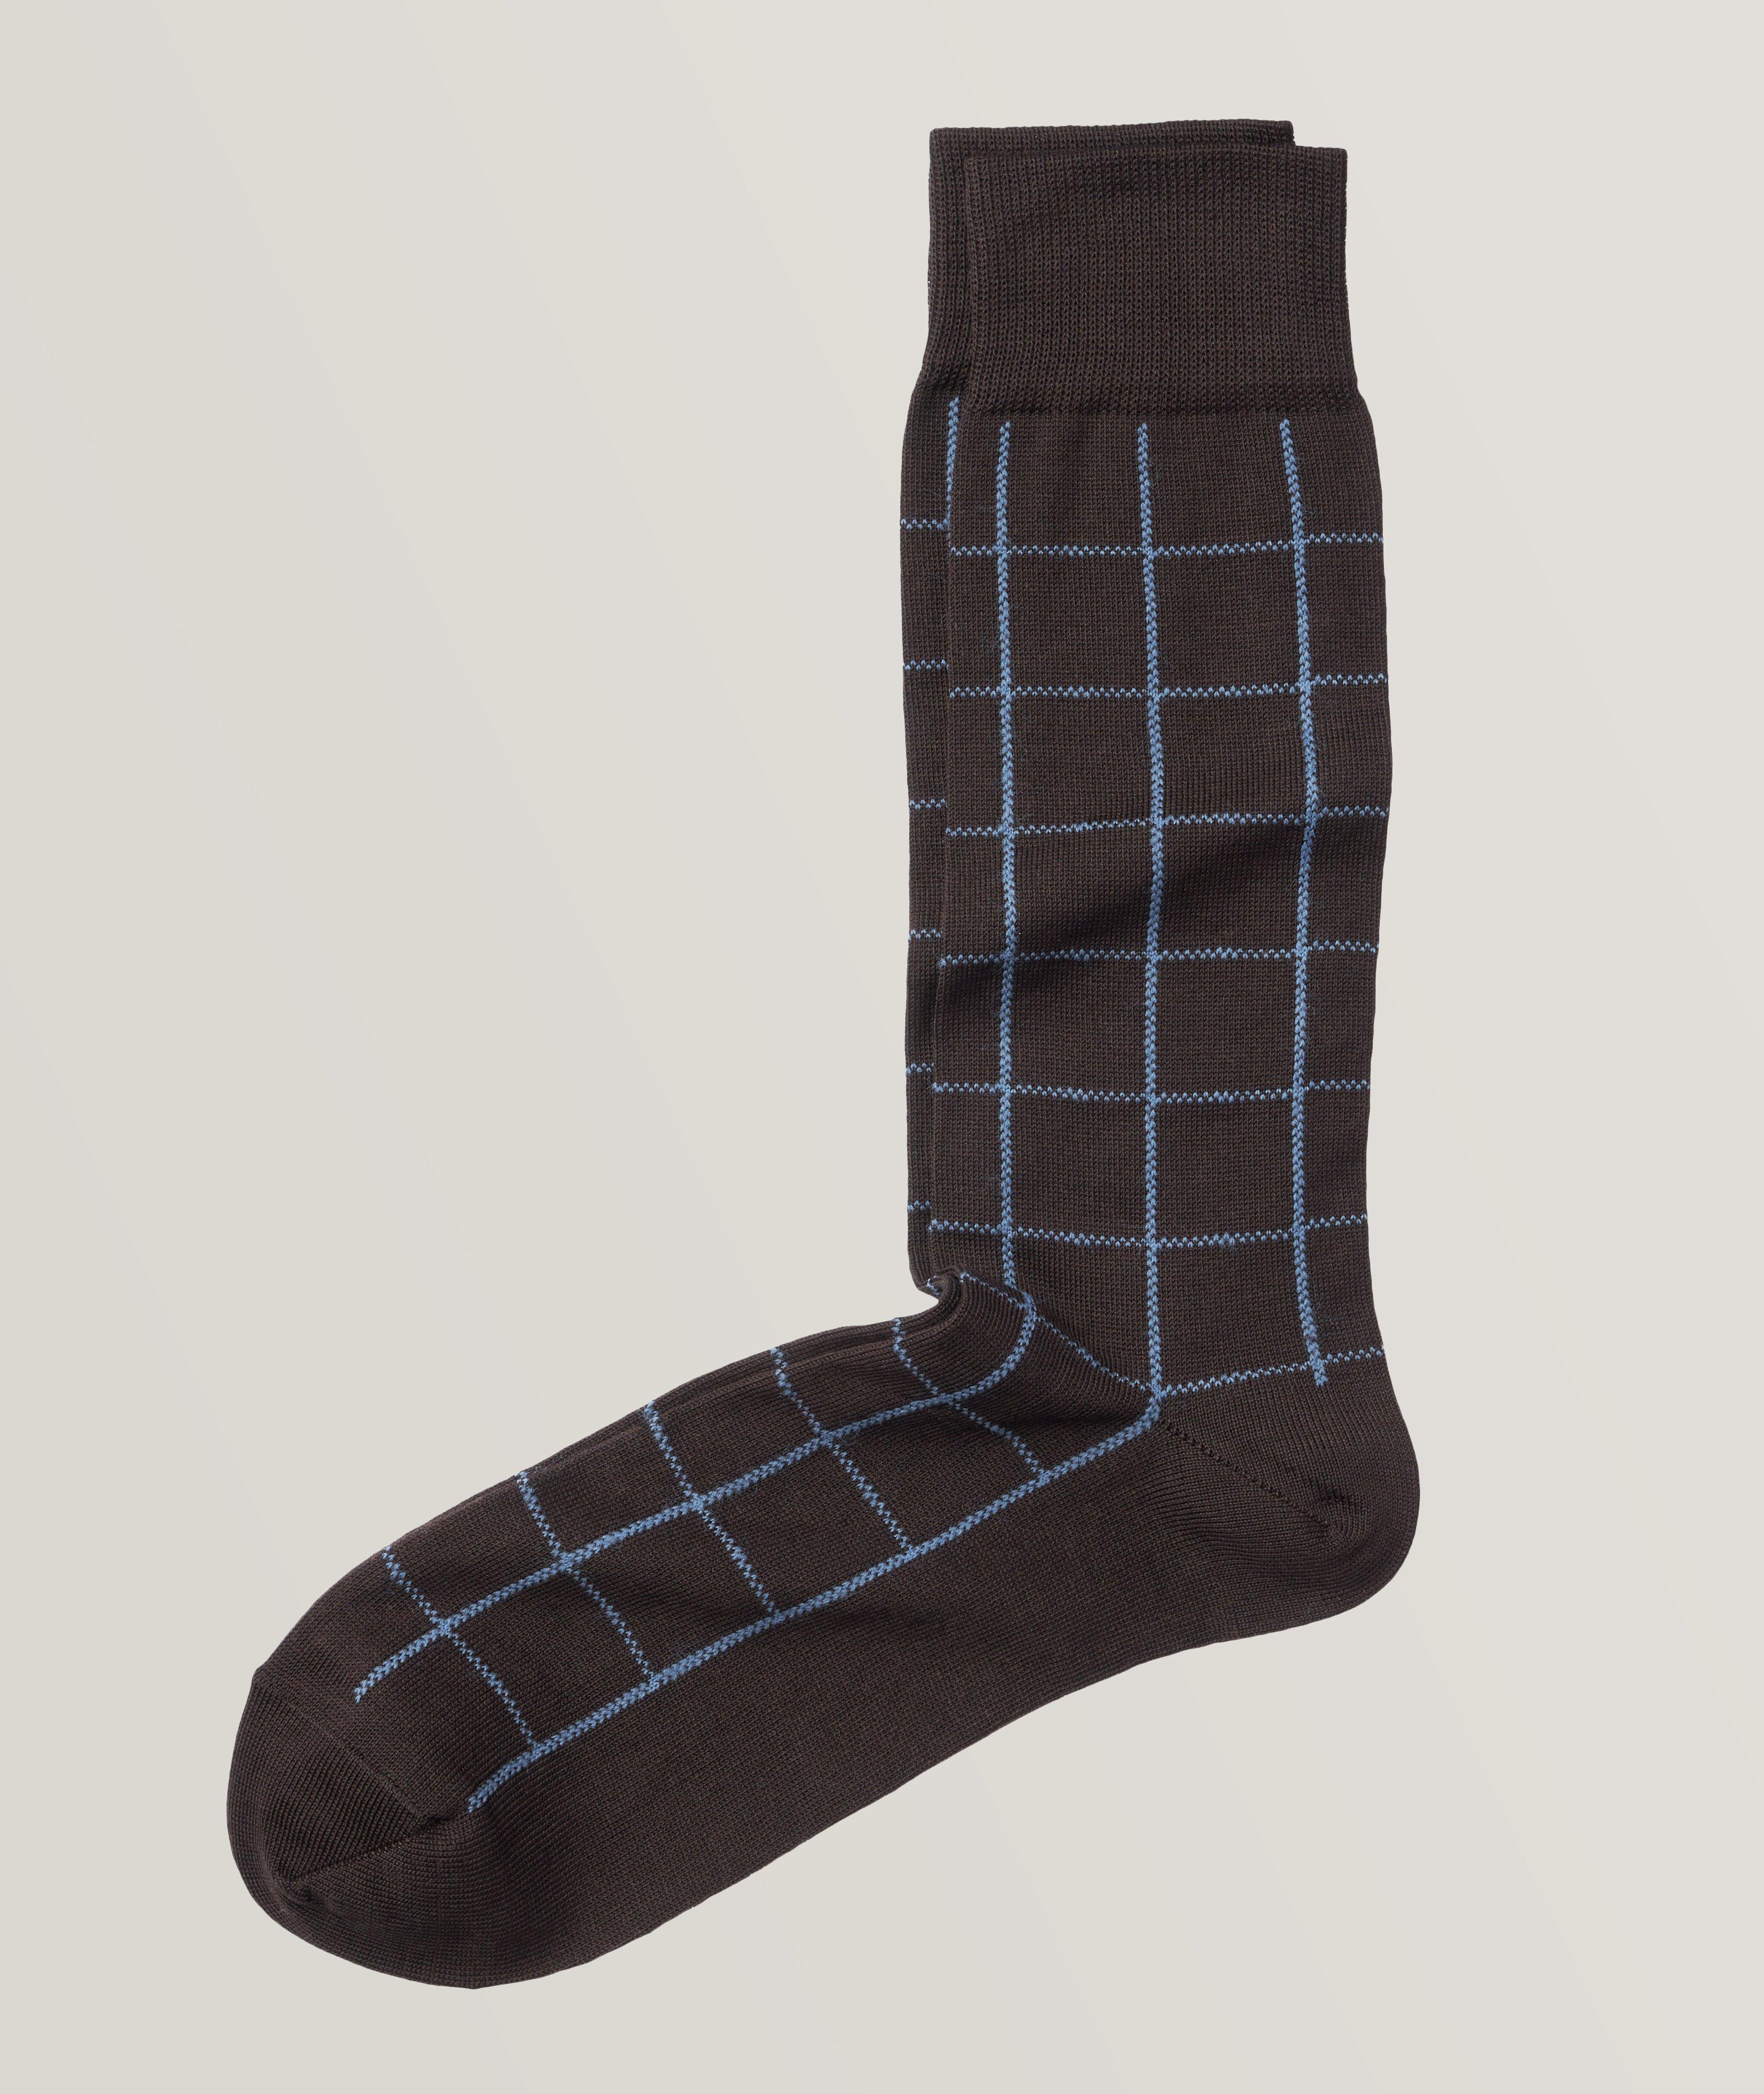 Windowpane Pattern Cotton Blend Socks image 0